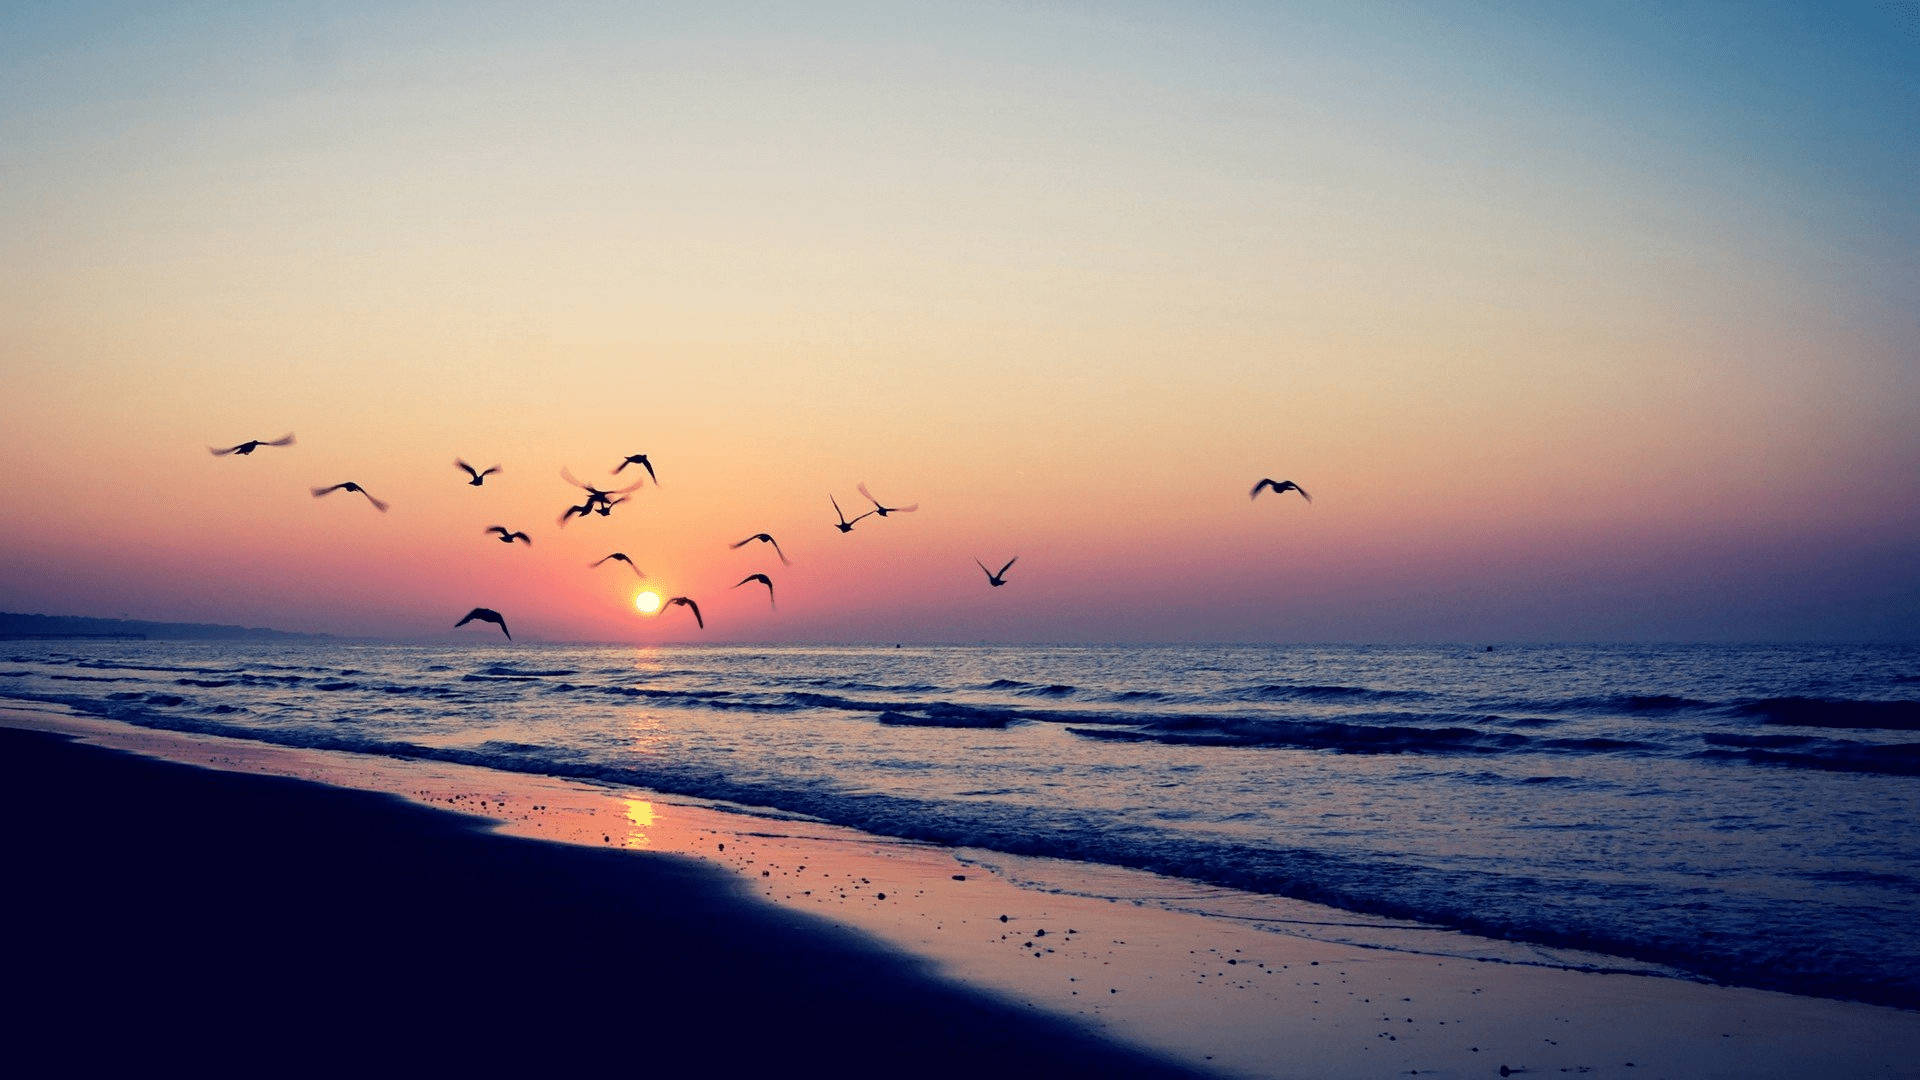 Aesthetic Sunset With Ocean Birds